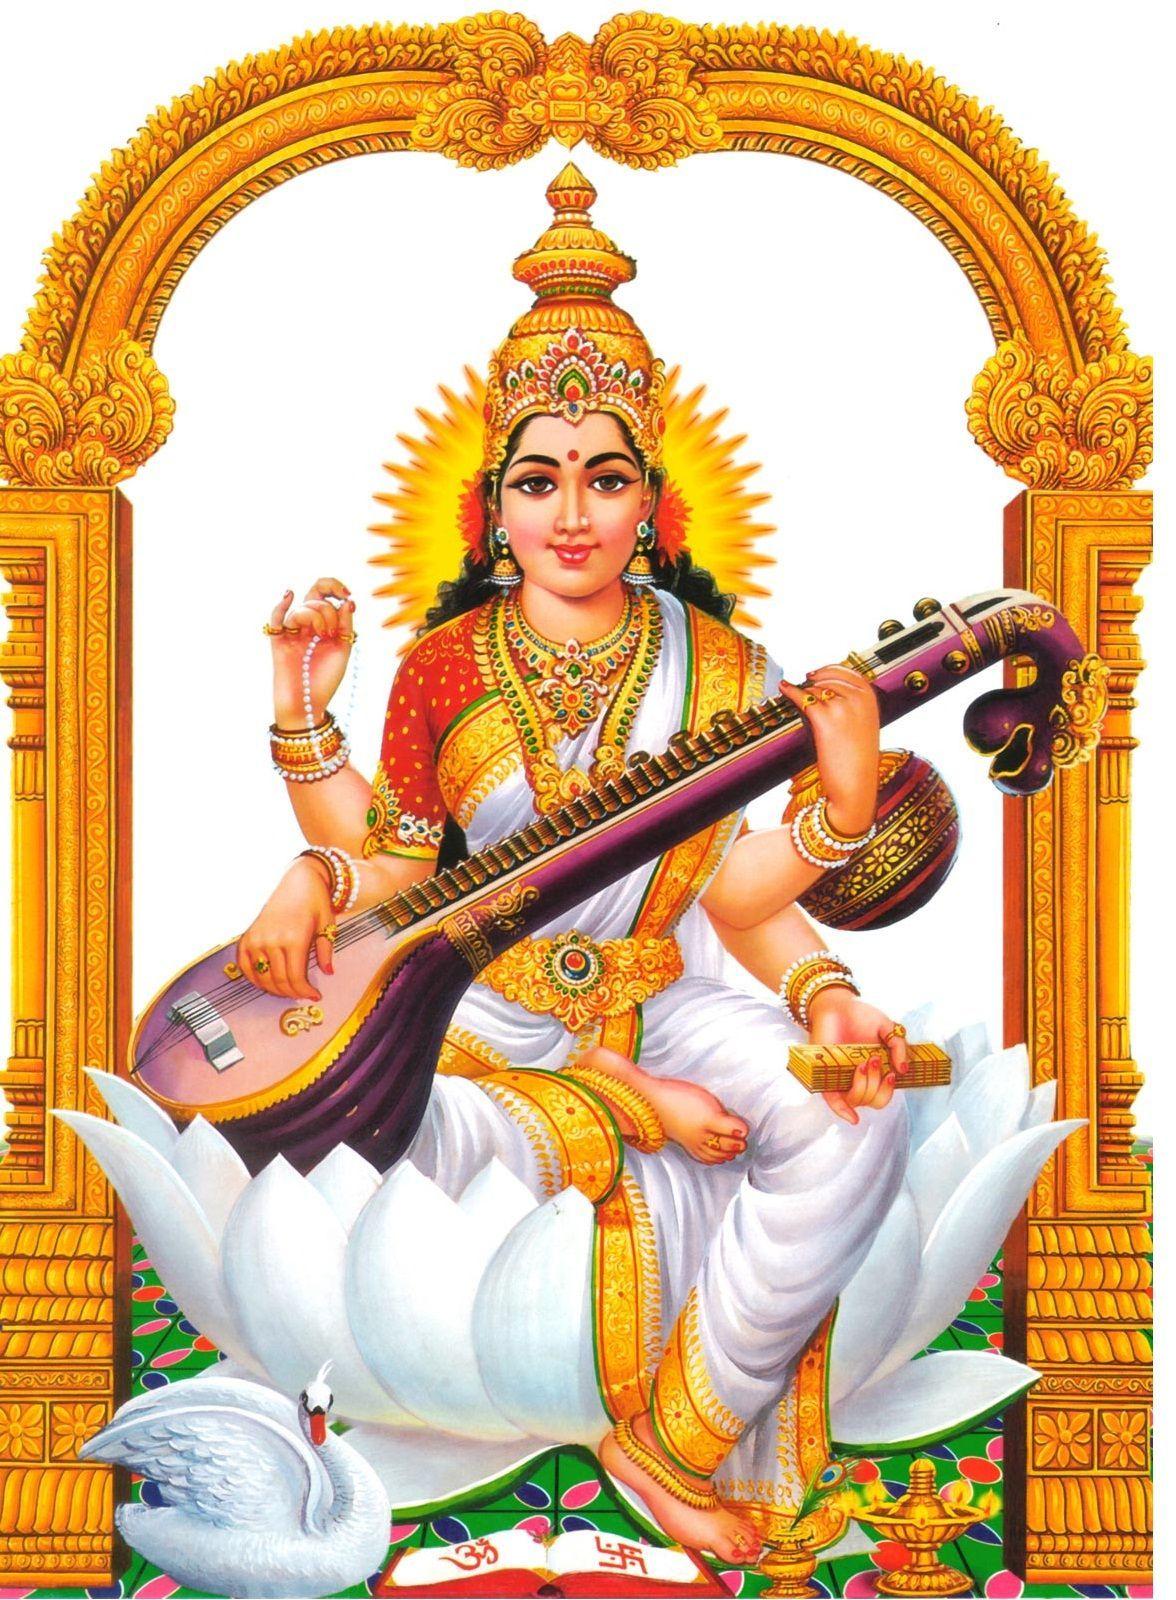 Hindu God Wallpaper for Mobile Phones, God Image HD Photo. Saraswathi devi, Saraswati goddess, Hindu gods